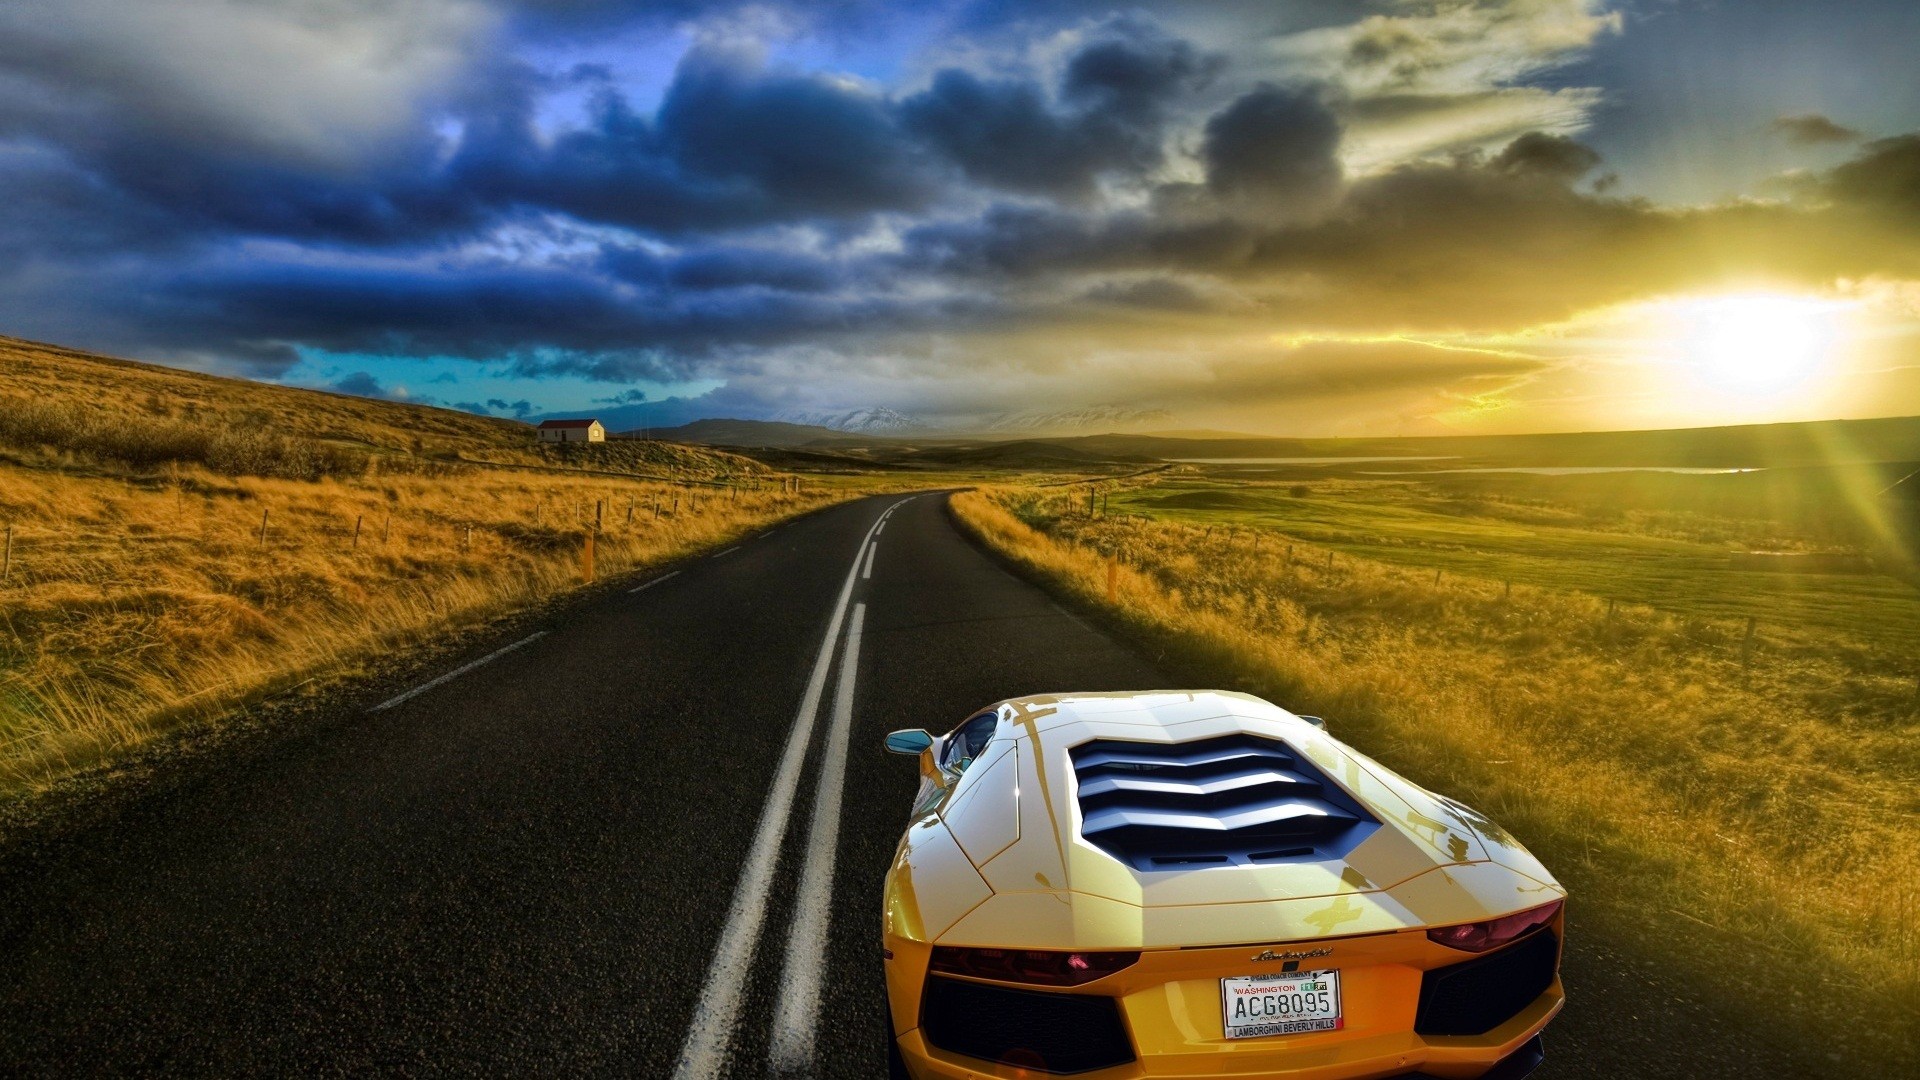 Lamborghini Aventador HD Wallpaper